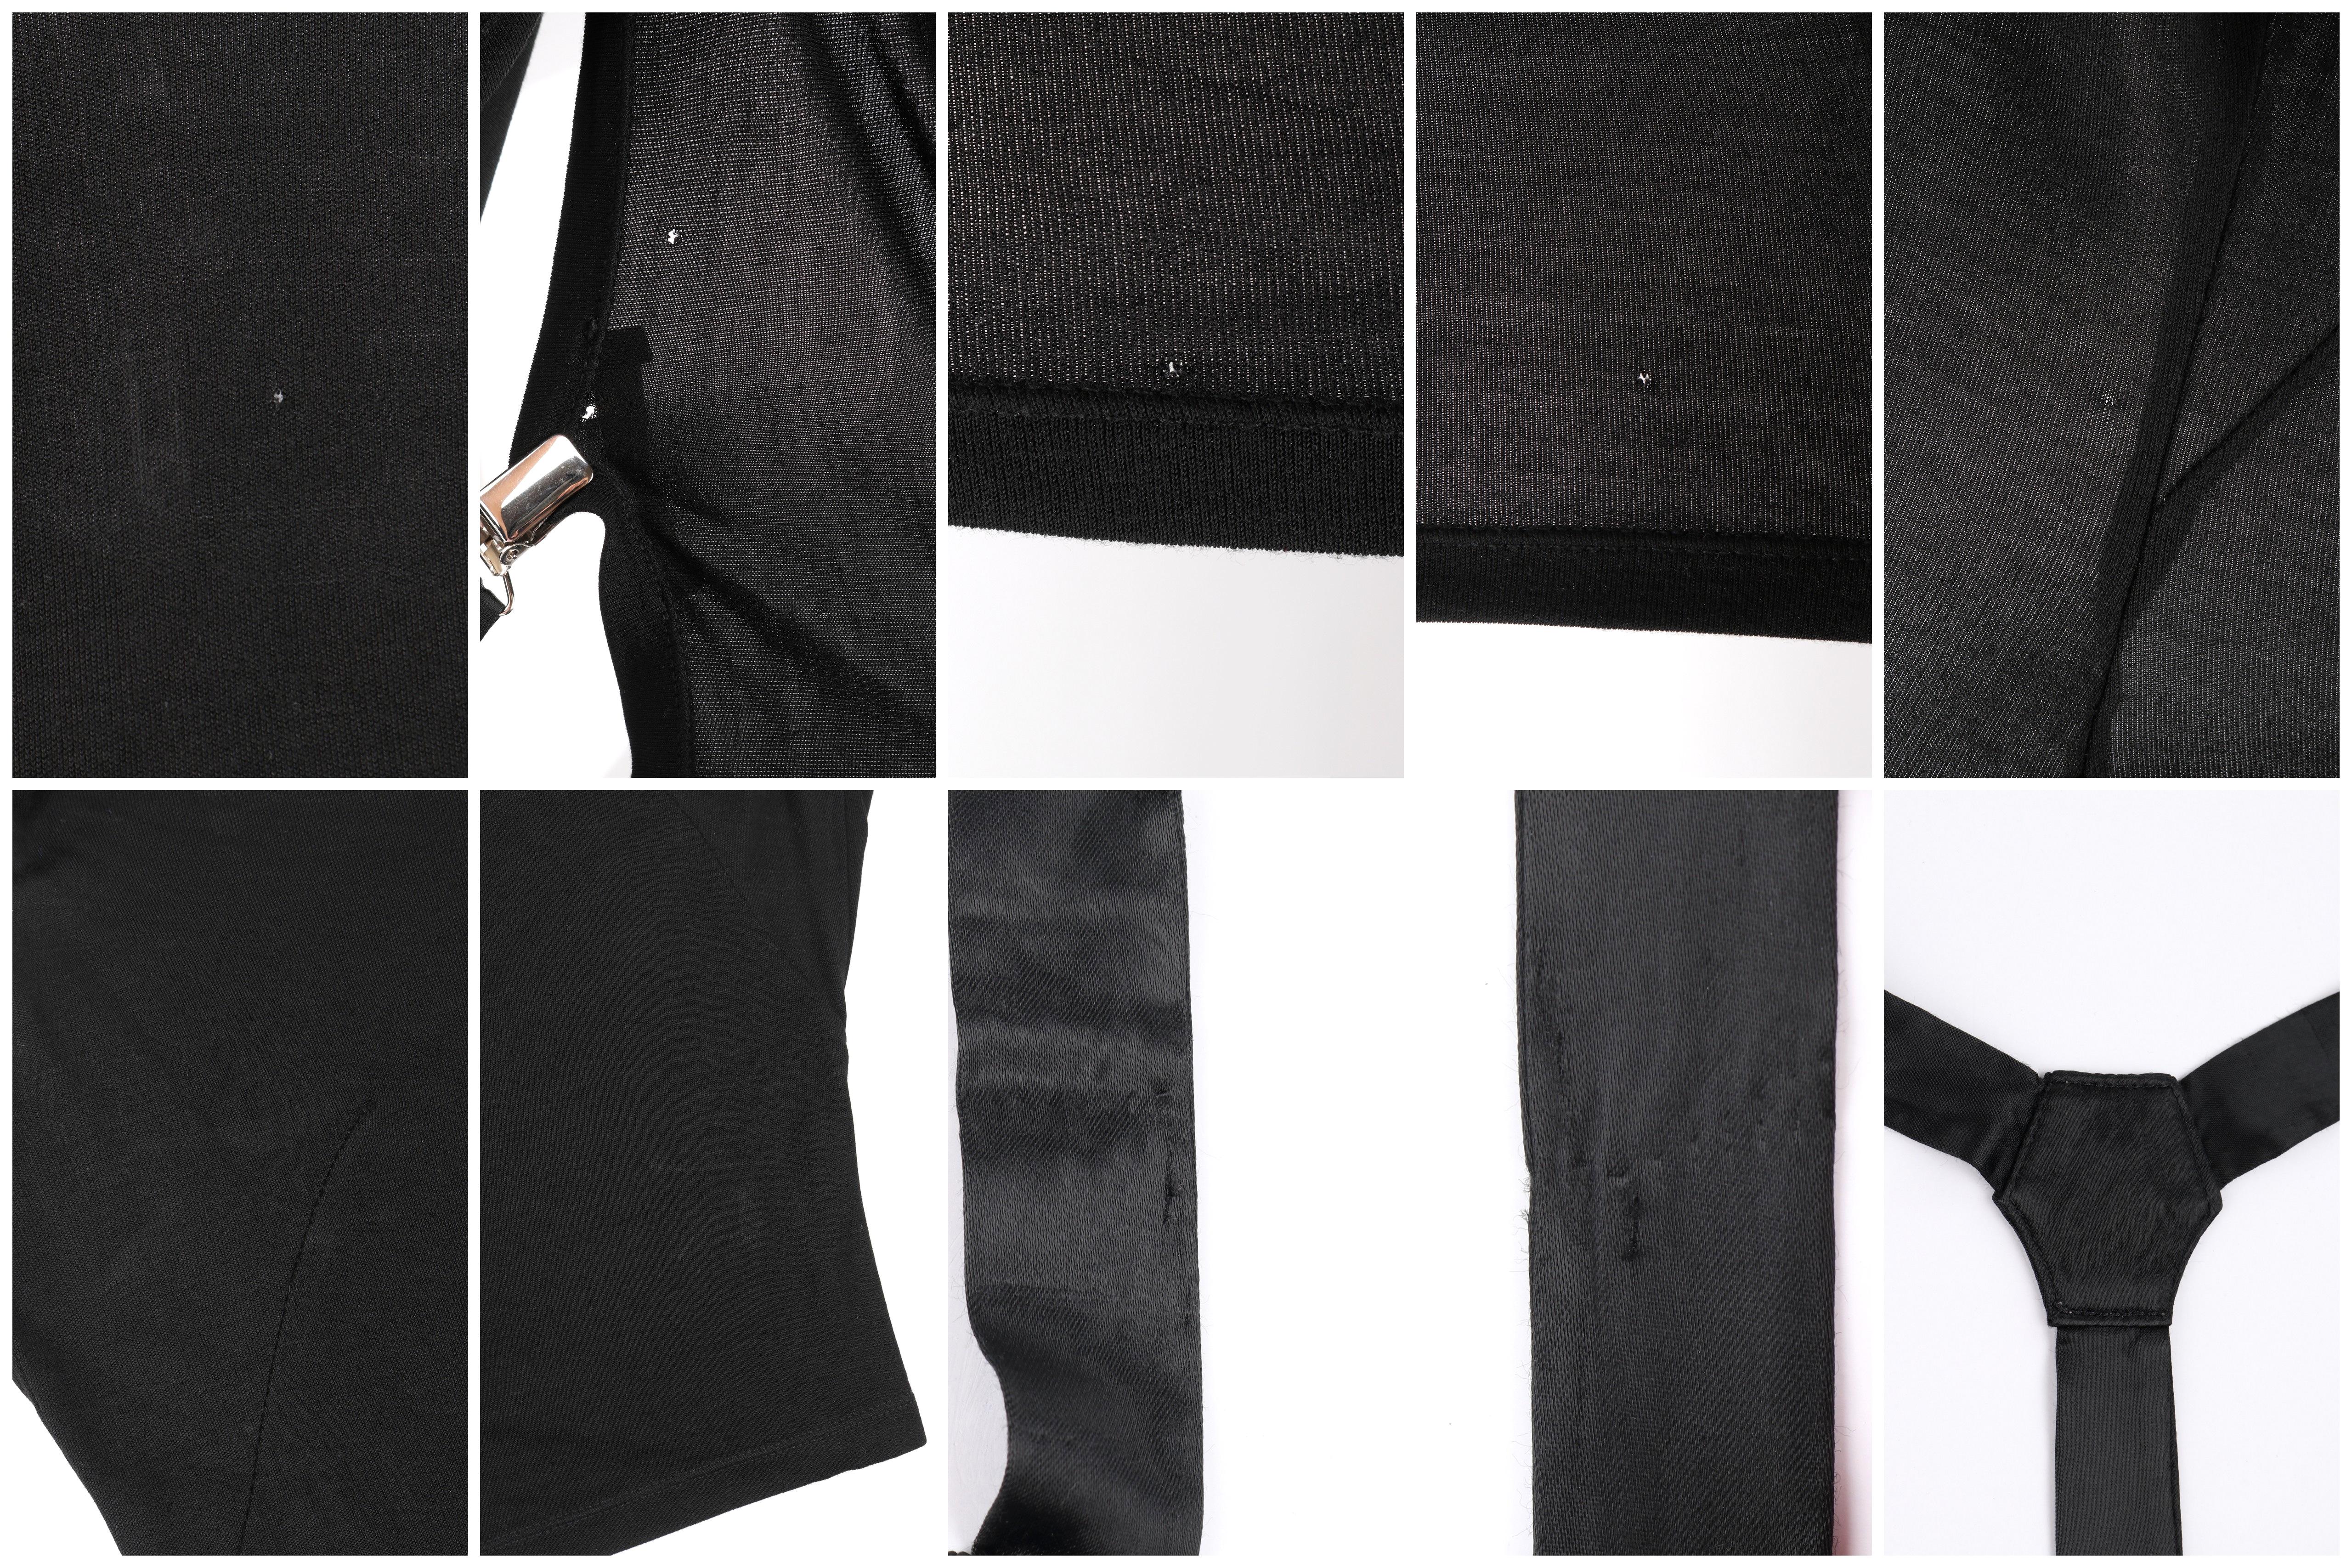  ALEXANDER McQUEEN S/S 2000 Knit Black Cowl Neck Satin Suspender Strap Tank Top For Sale 1